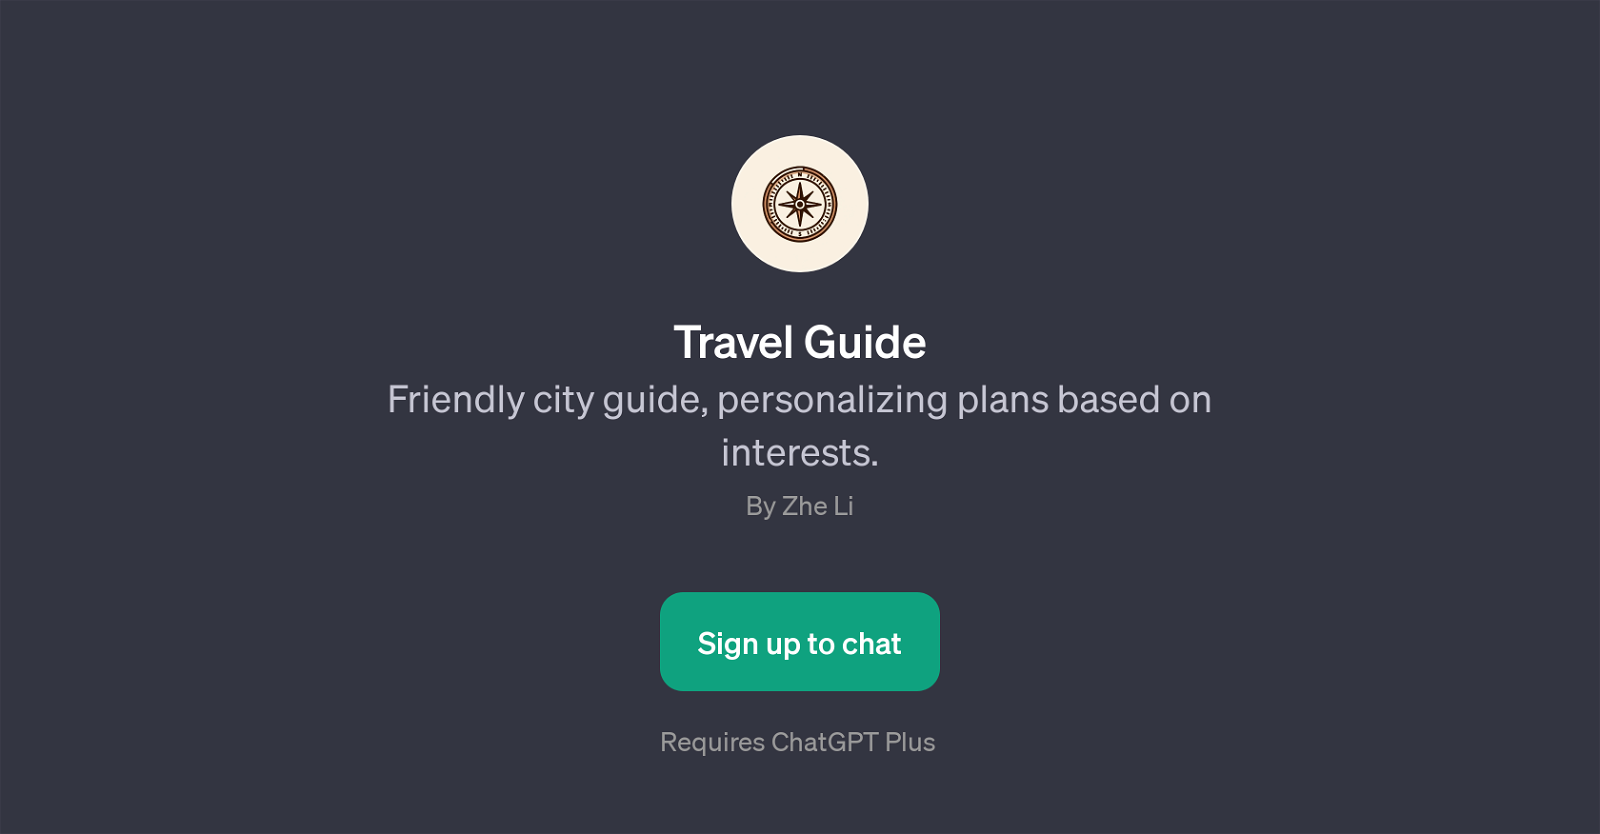 Travel Guide website